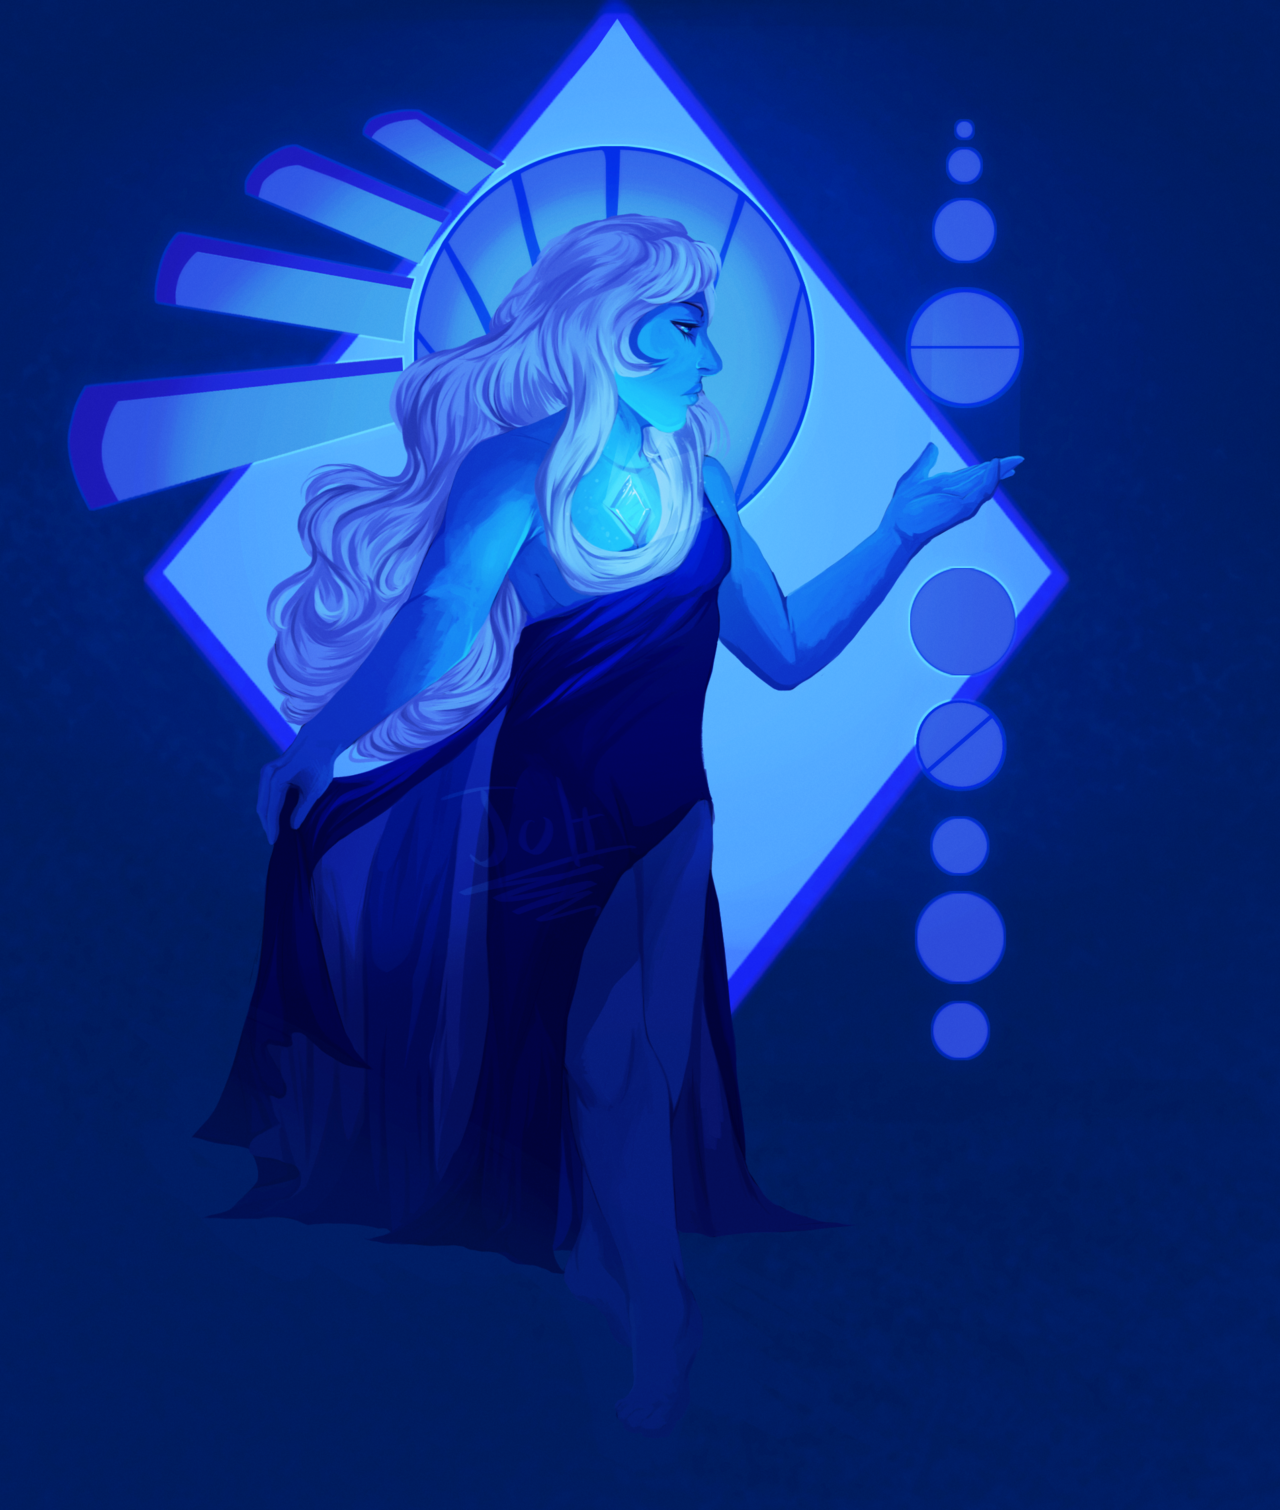 drew blue diamond based on her mural at the moon base